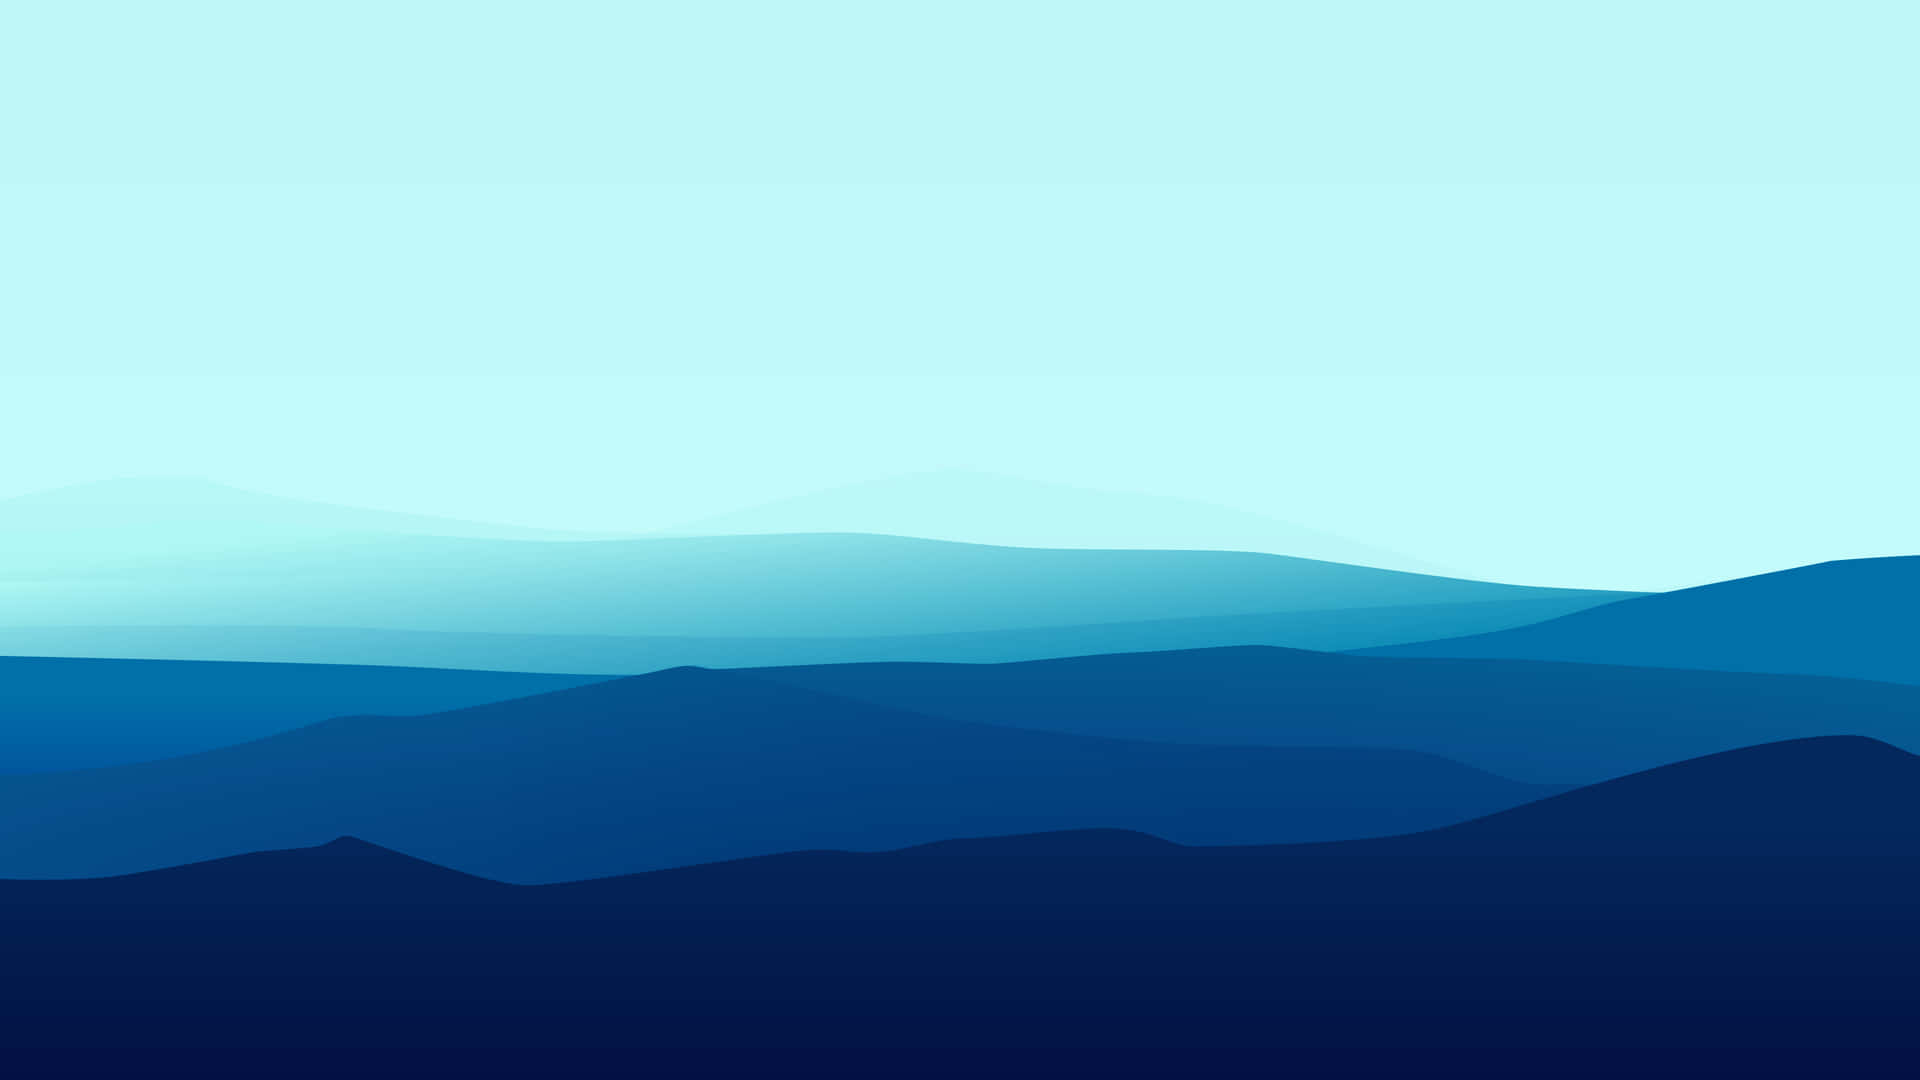 4k Minimal Blue Mountain Range Landscape Wallpaper